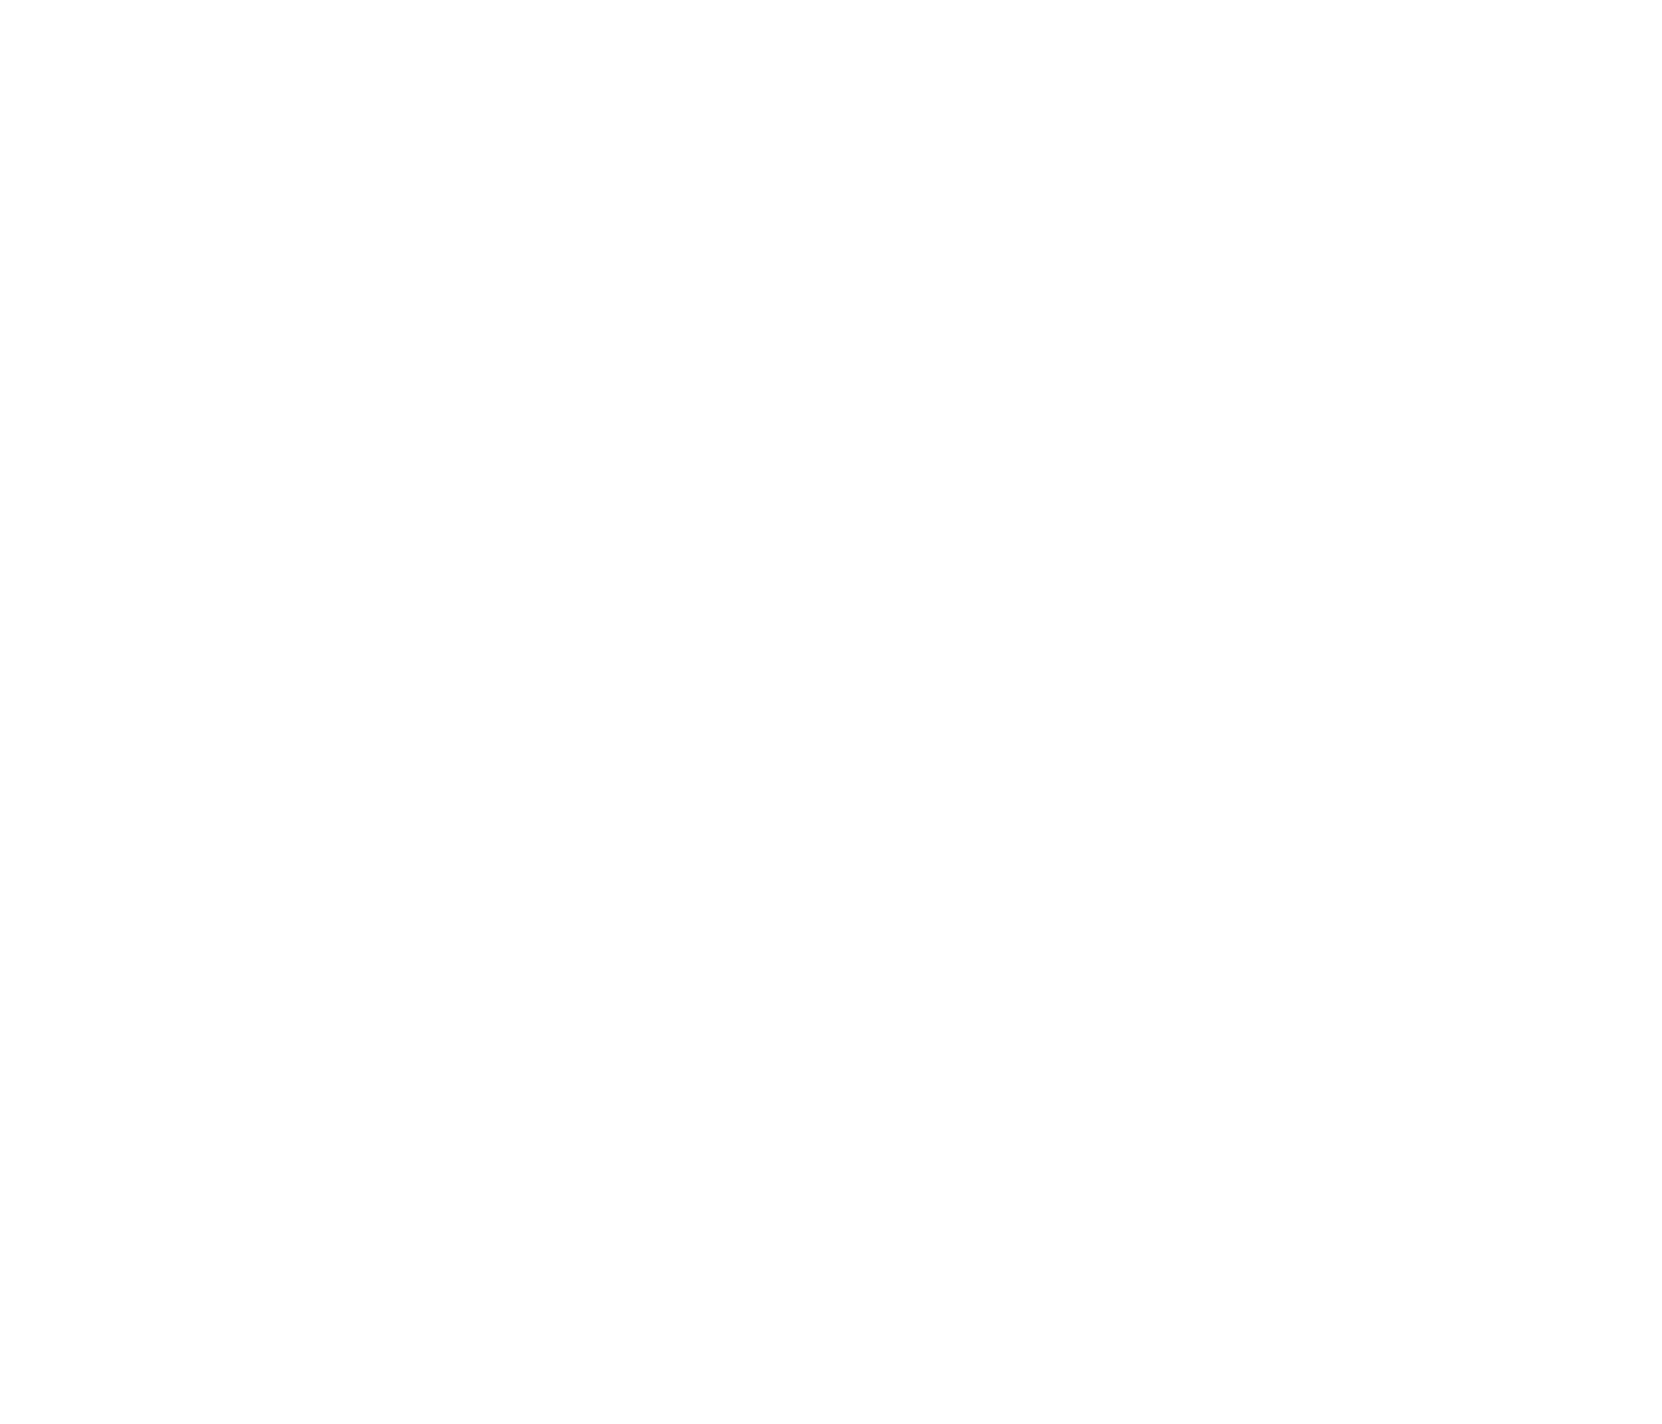 stoke-on-trent city council logo (white)